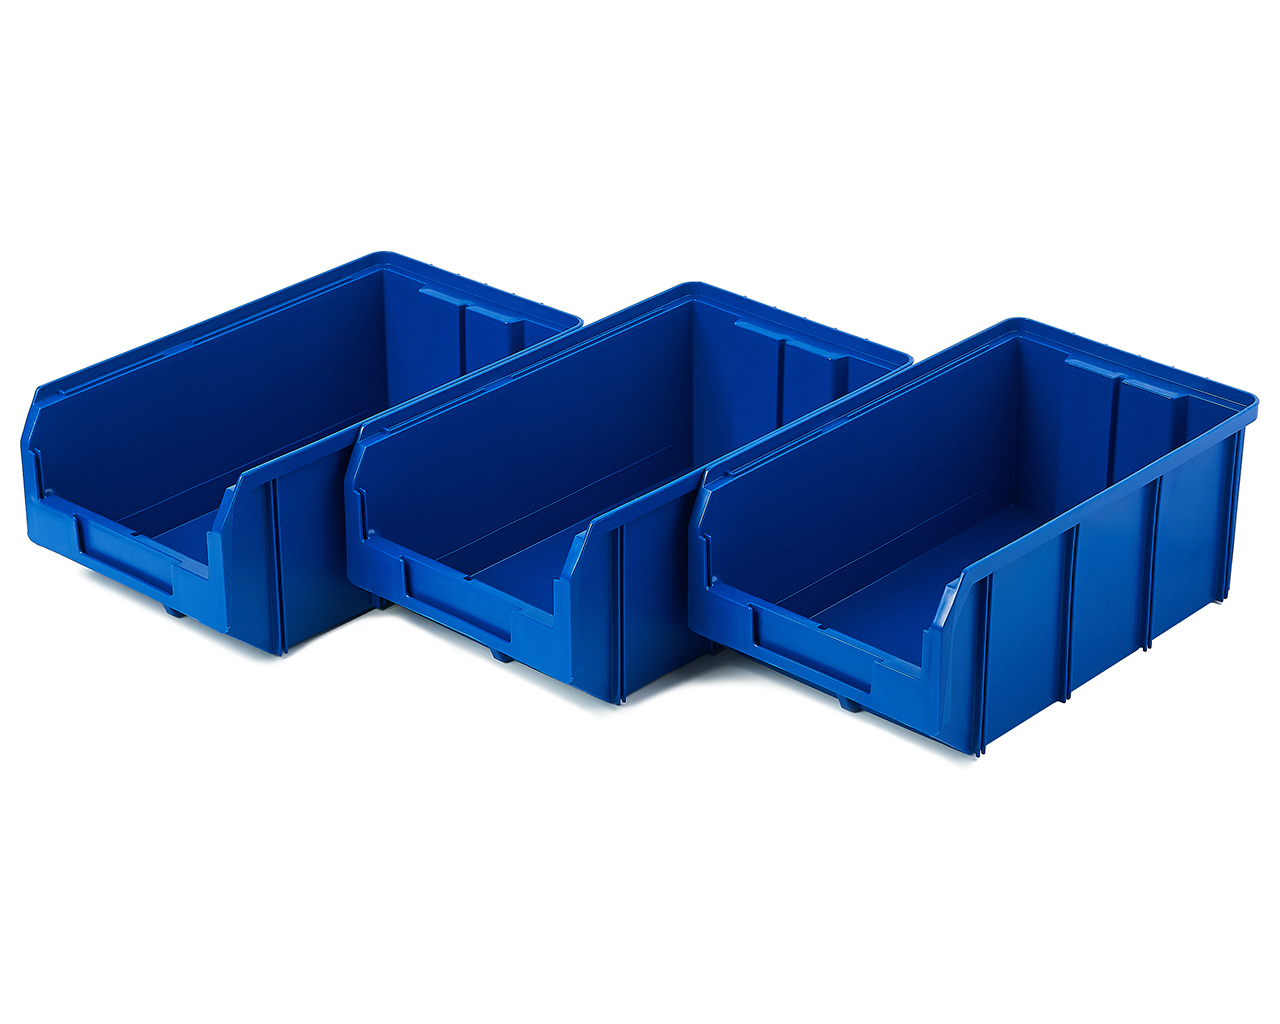 Пластиковый ящик Стелла-техник V-3-К3-синий, 341х207х143 мм, комплект 3 шт